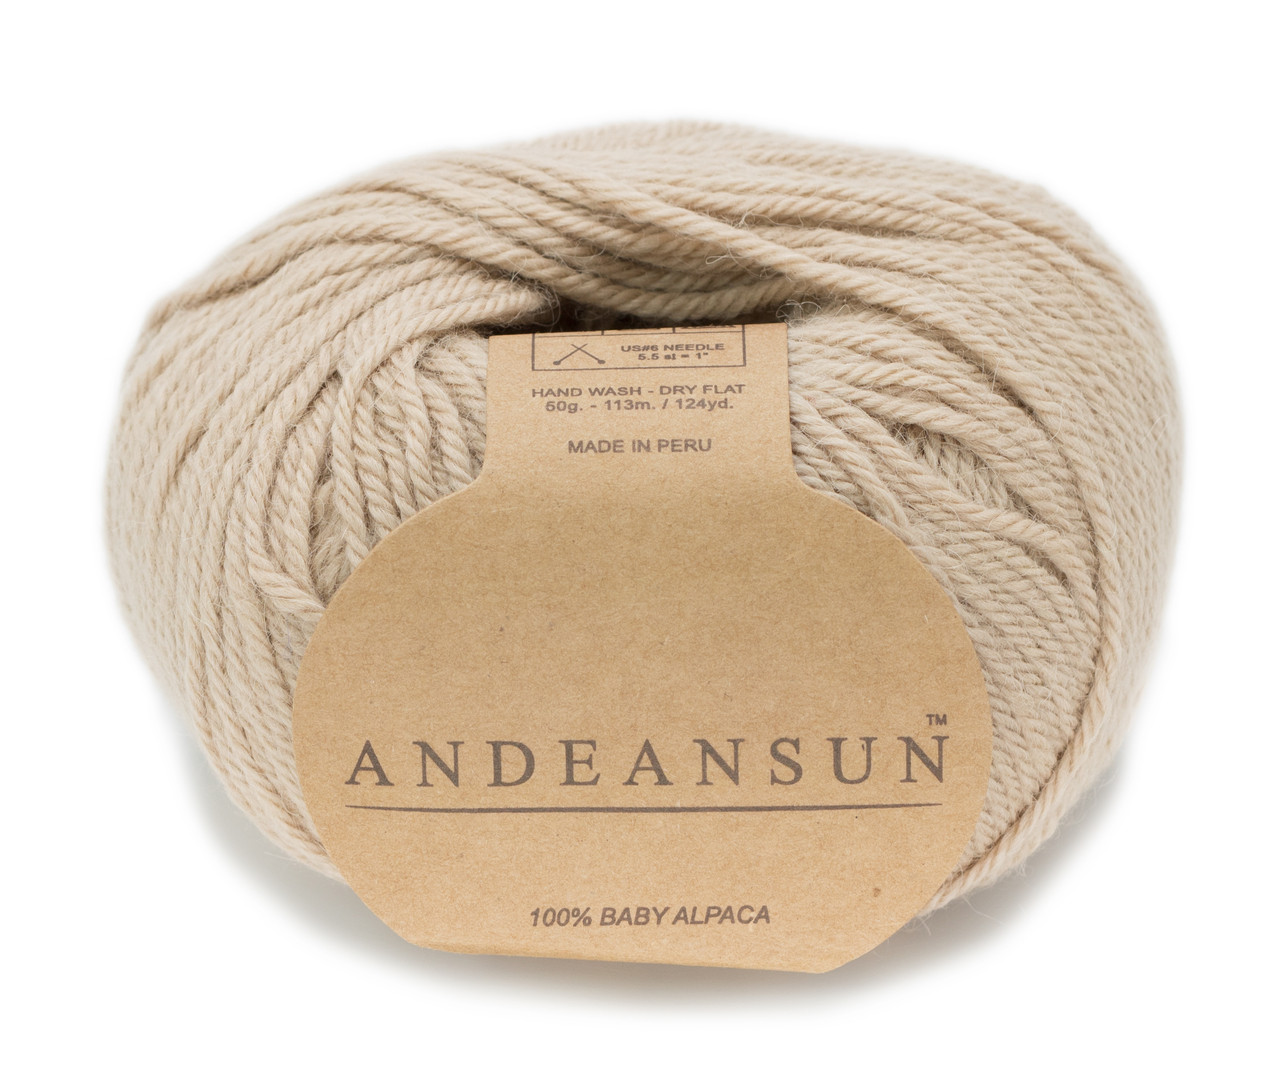 Andean Sun Baby Alpaca Yarn Review & Giveaway